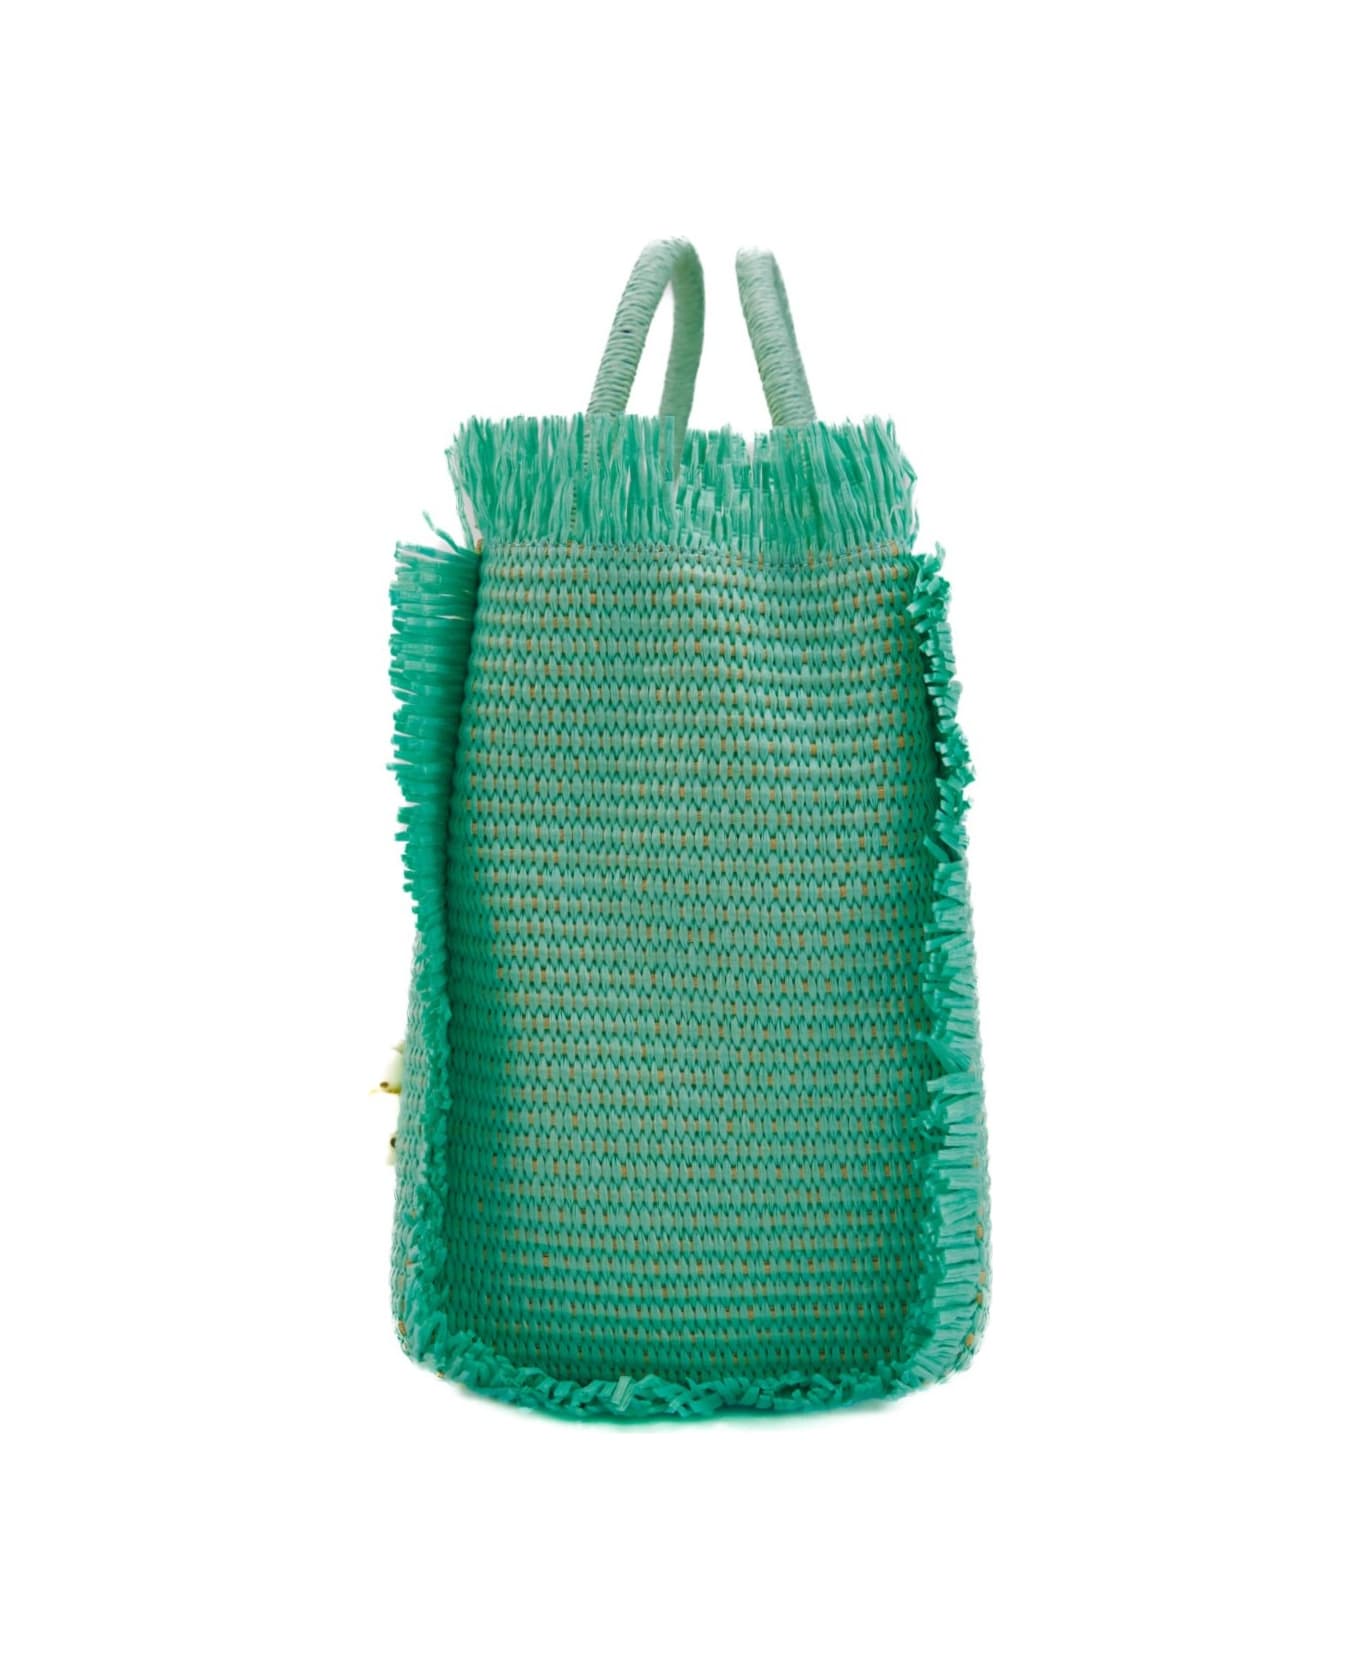 MC2 Saint Barth Colette Bag In Flower Beads Straw - Verde acqua